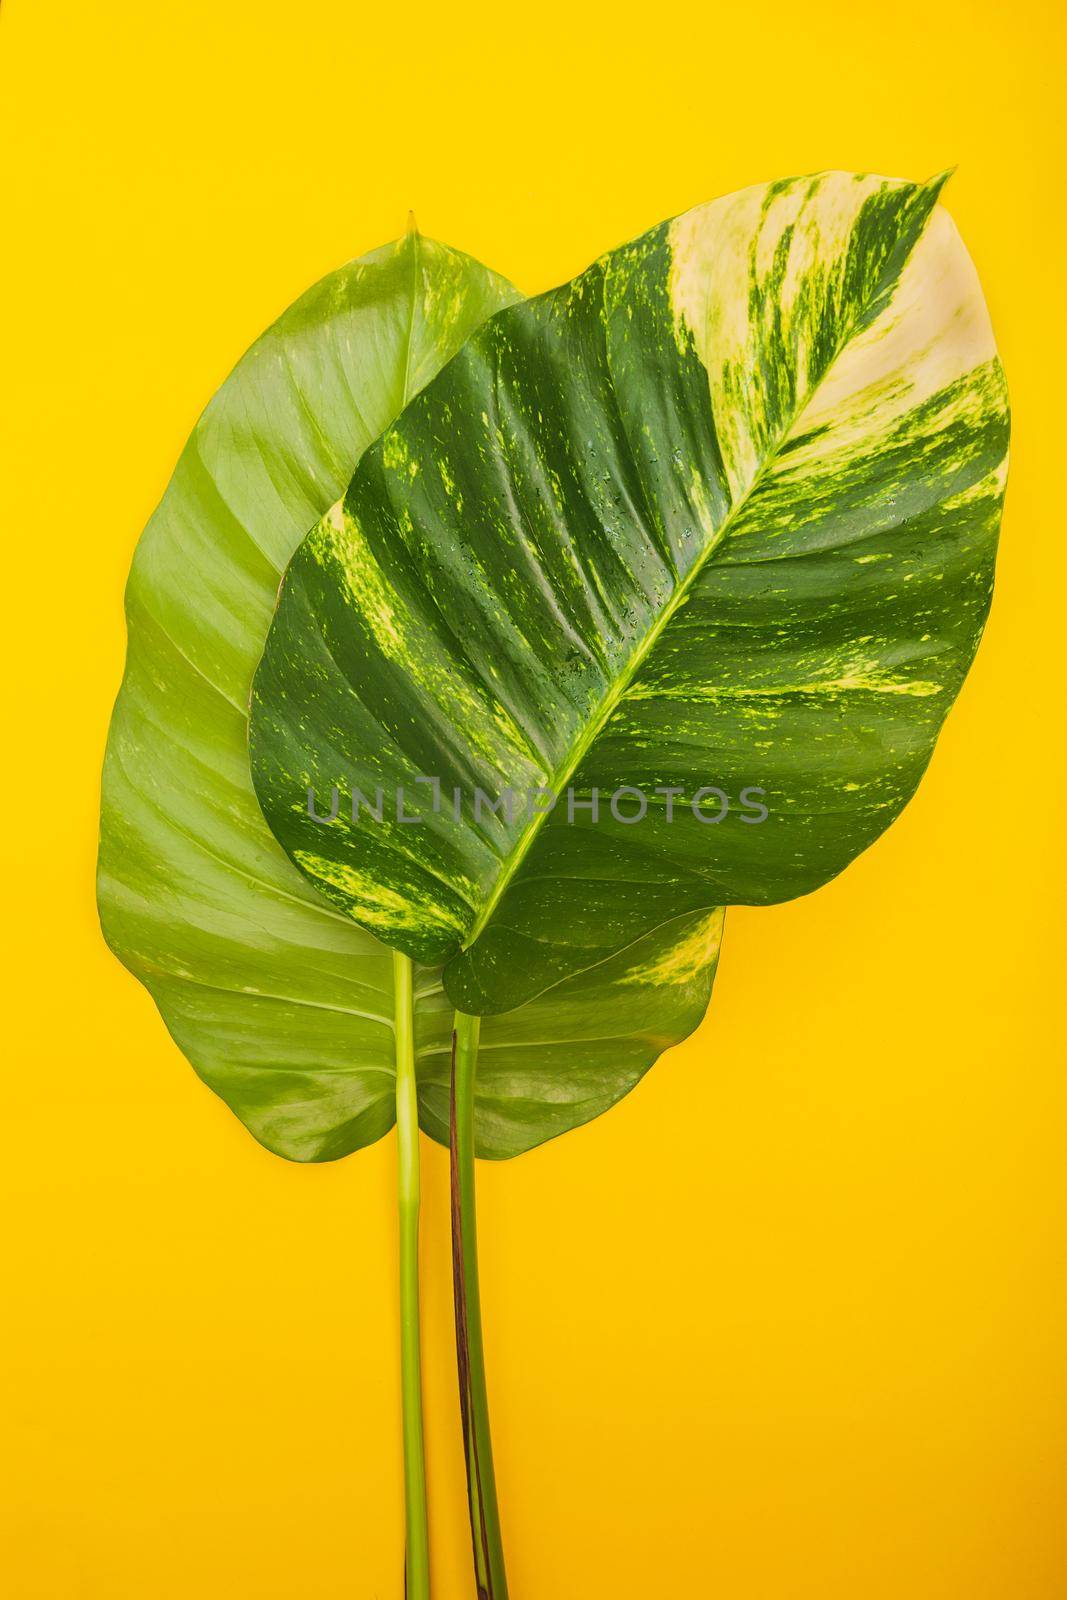 Green leaves on yellow background. Minimalist photo